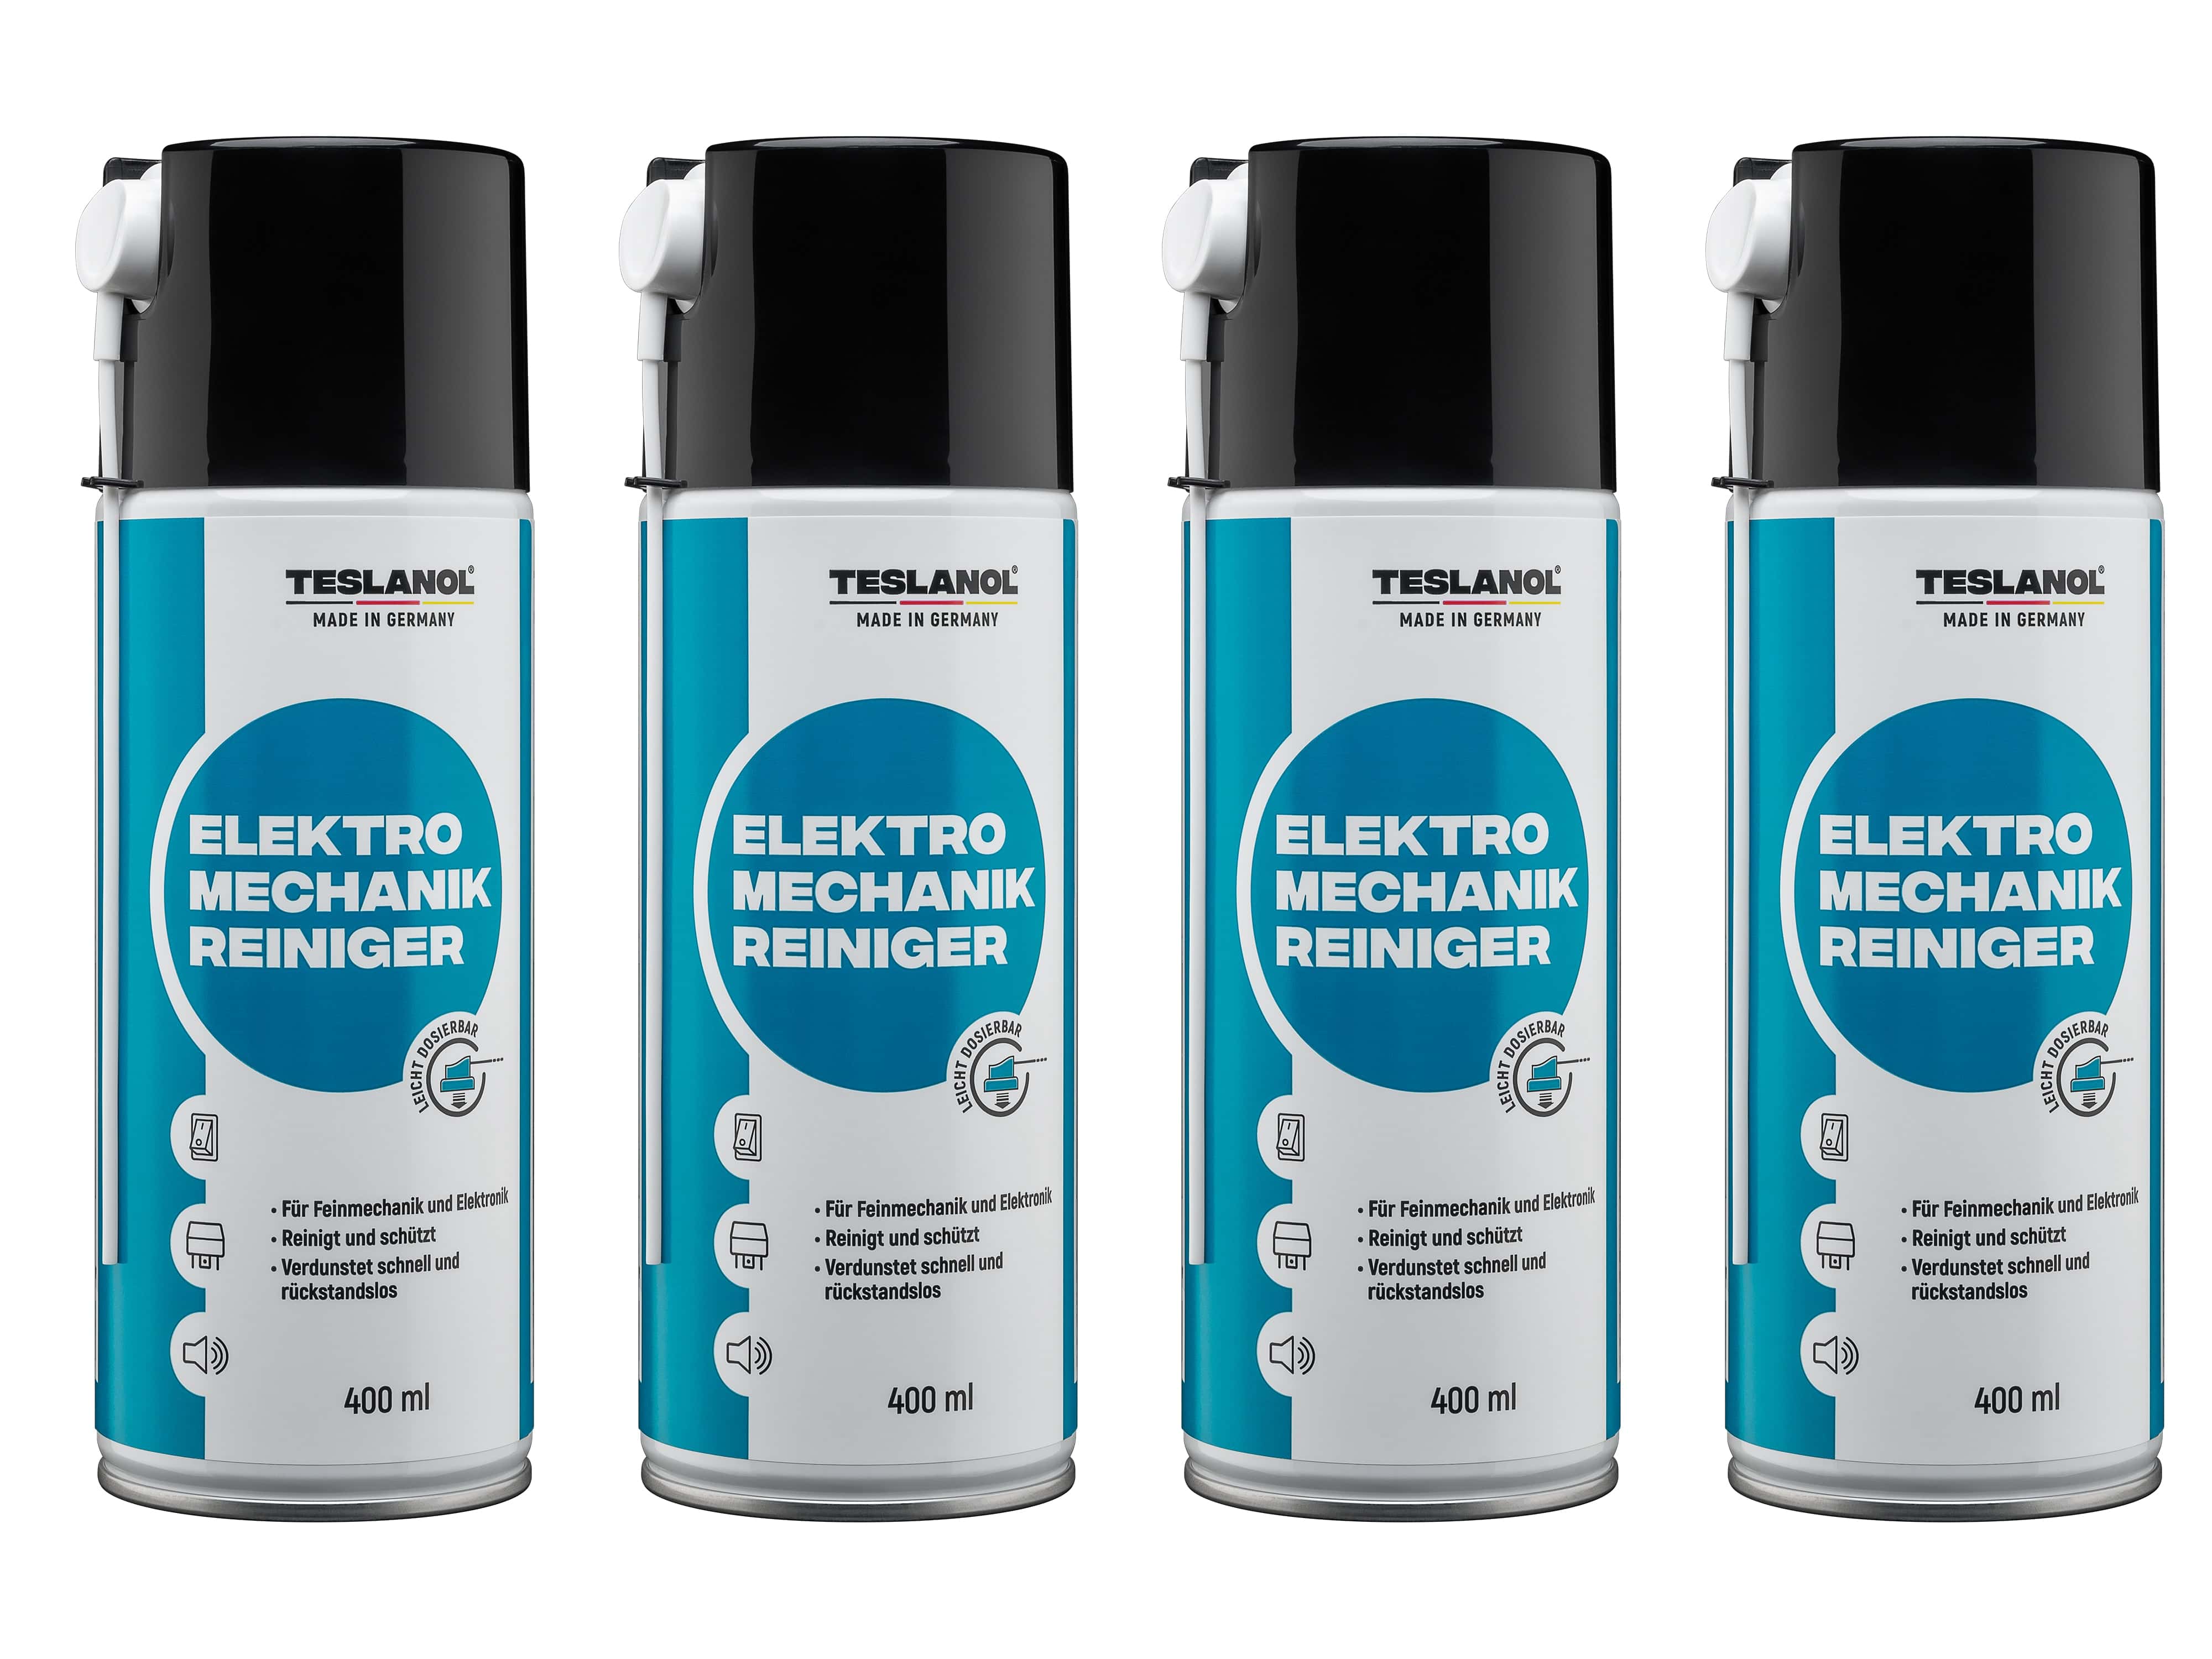 TESLANOL 26018 Elektro-Mechanik-Reinigerspray, 400 ml, 4 Stück